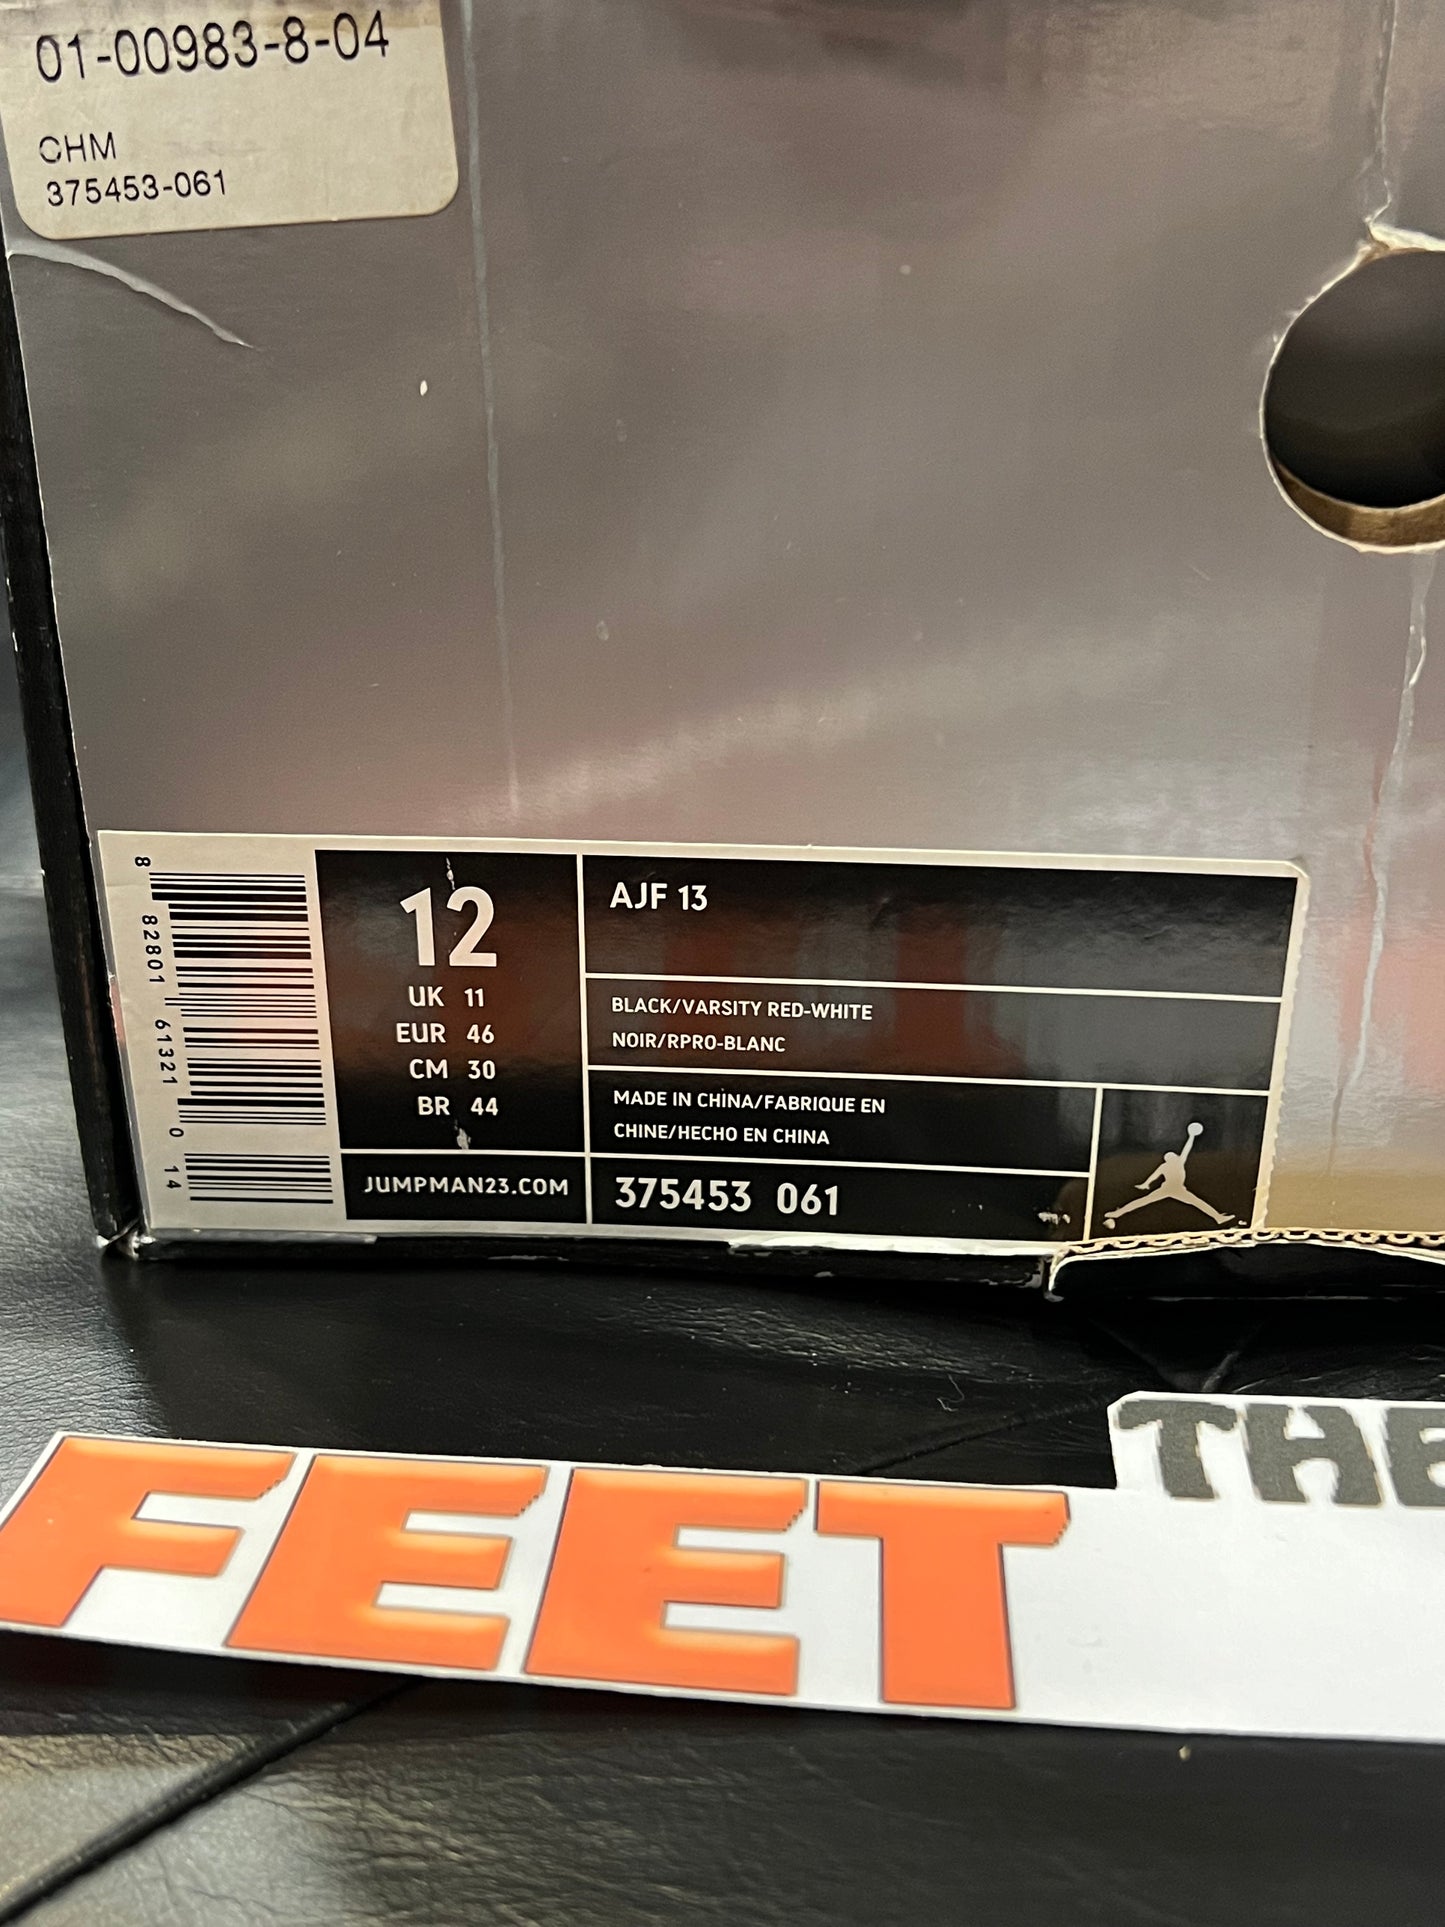 Pre Owned Nike Air Jordan 13 Force 1 Bred Men Shoes size 12